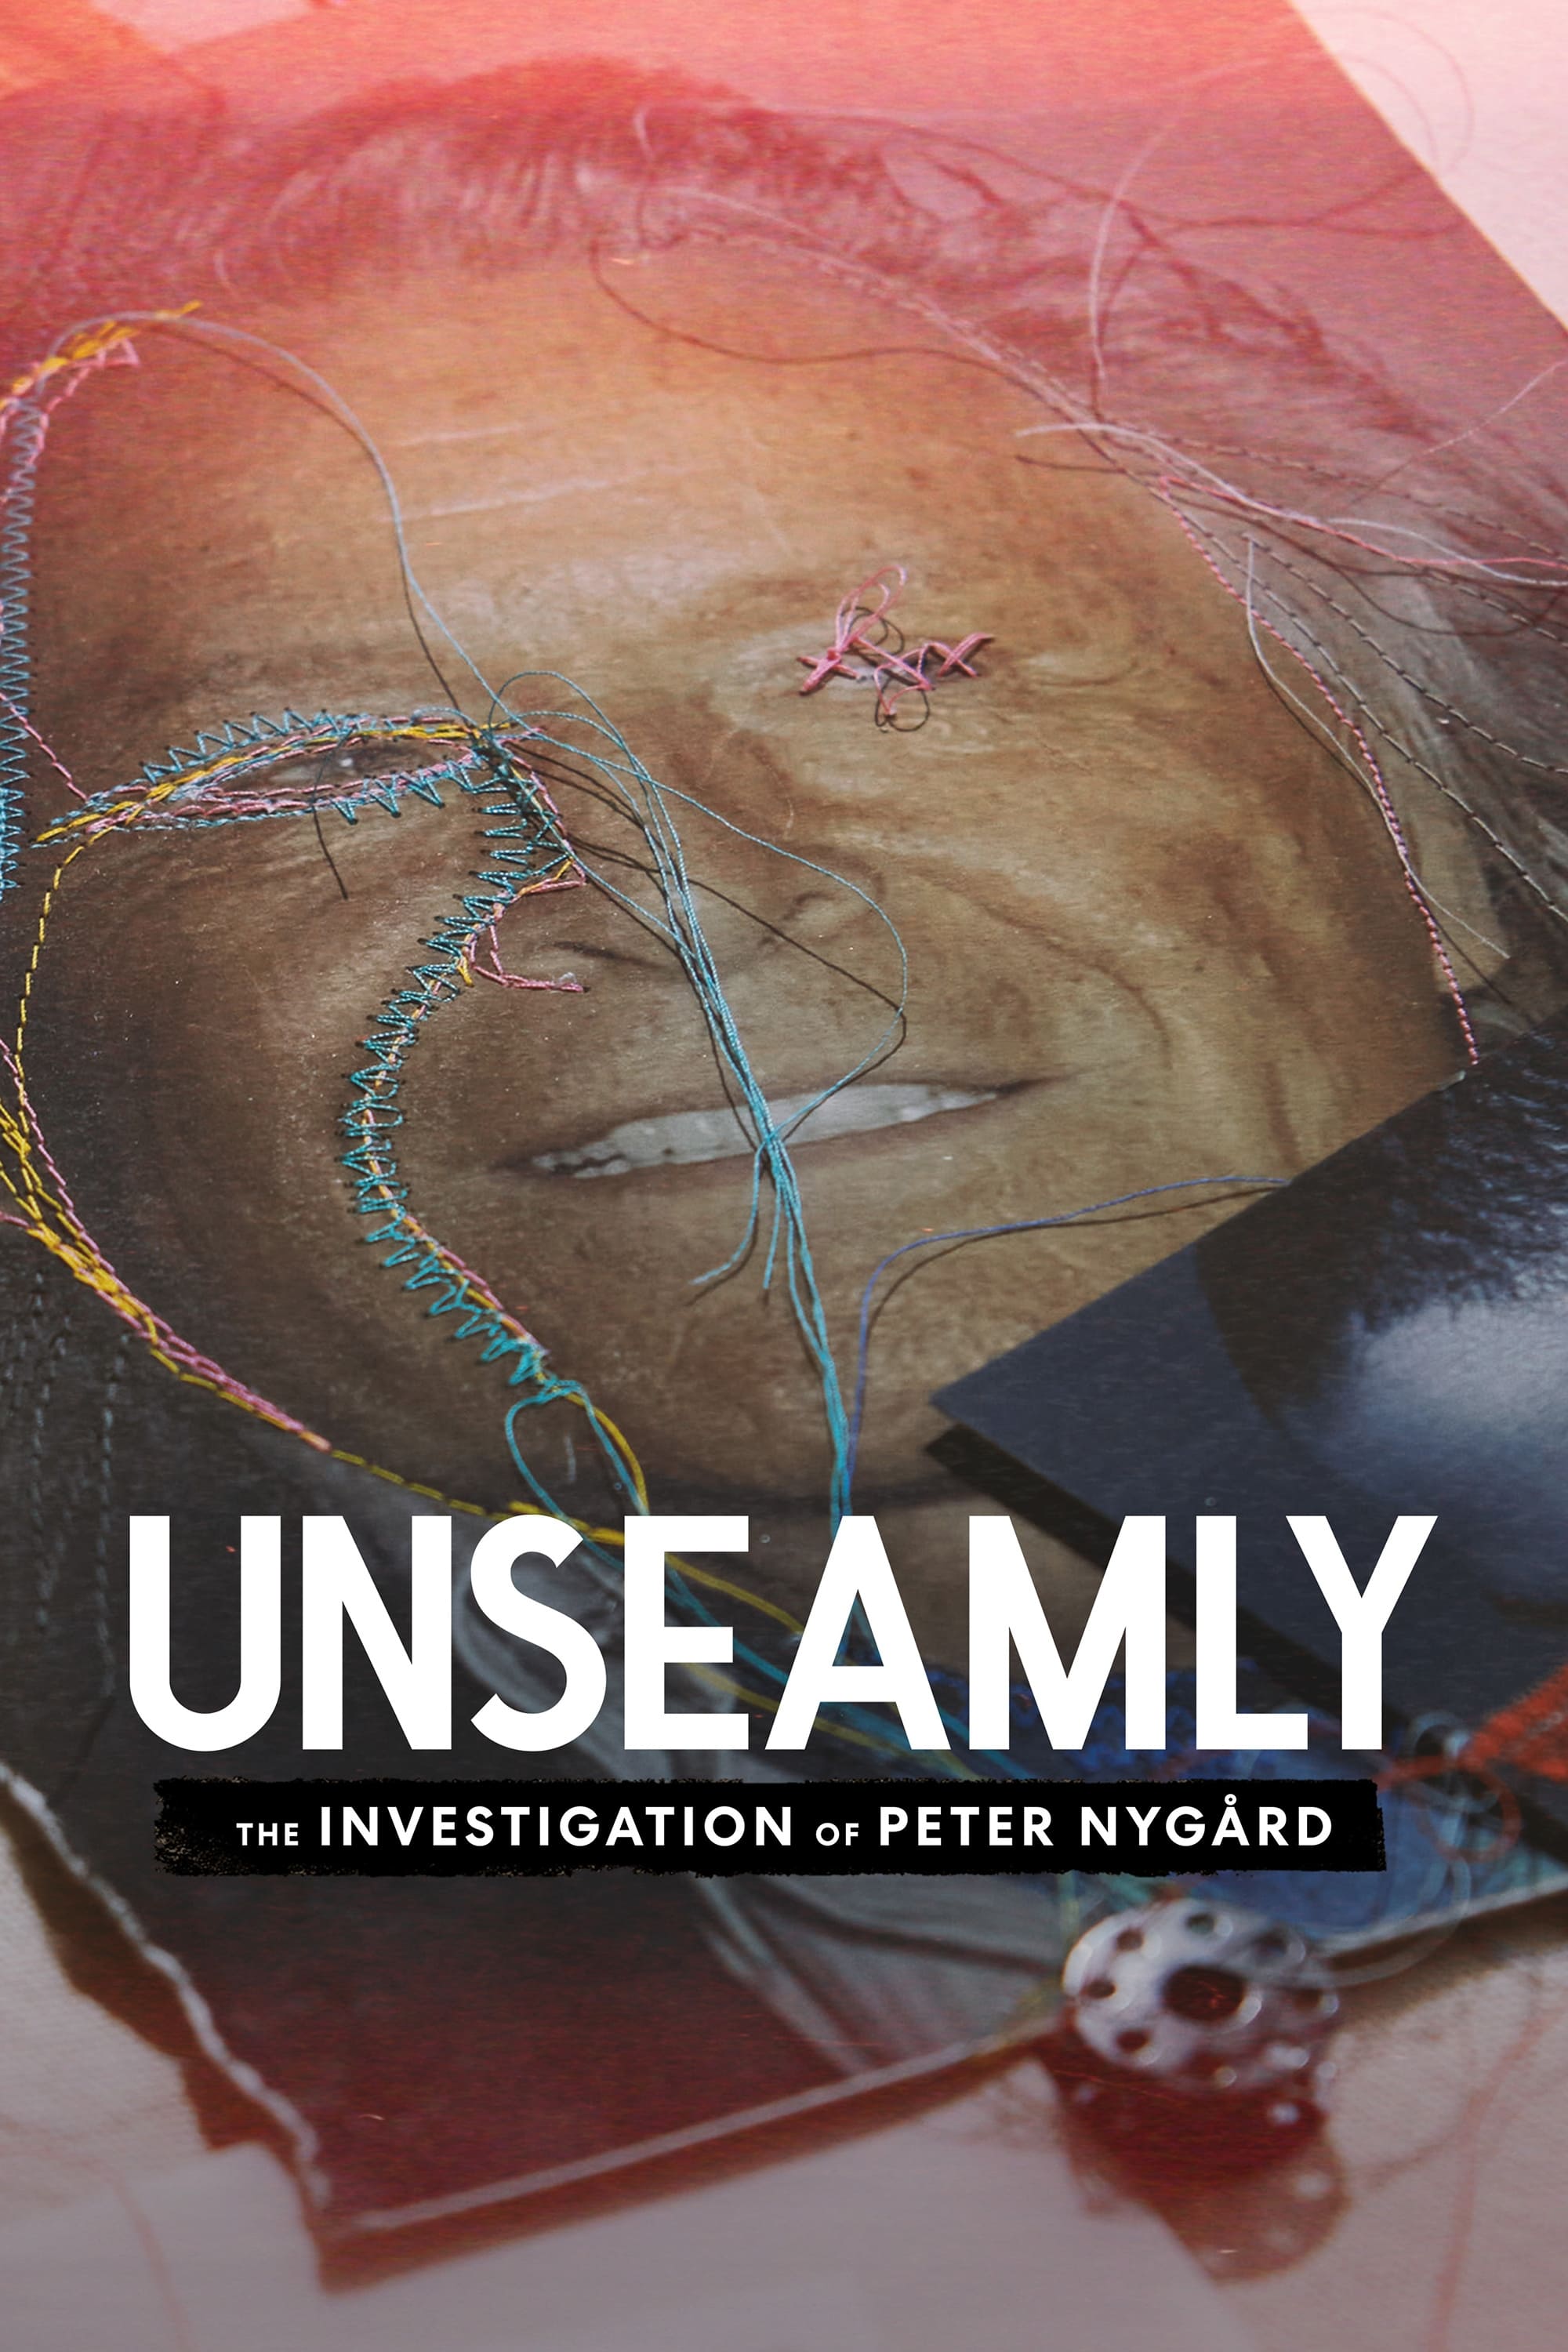 La investigacion de Peter Nygard